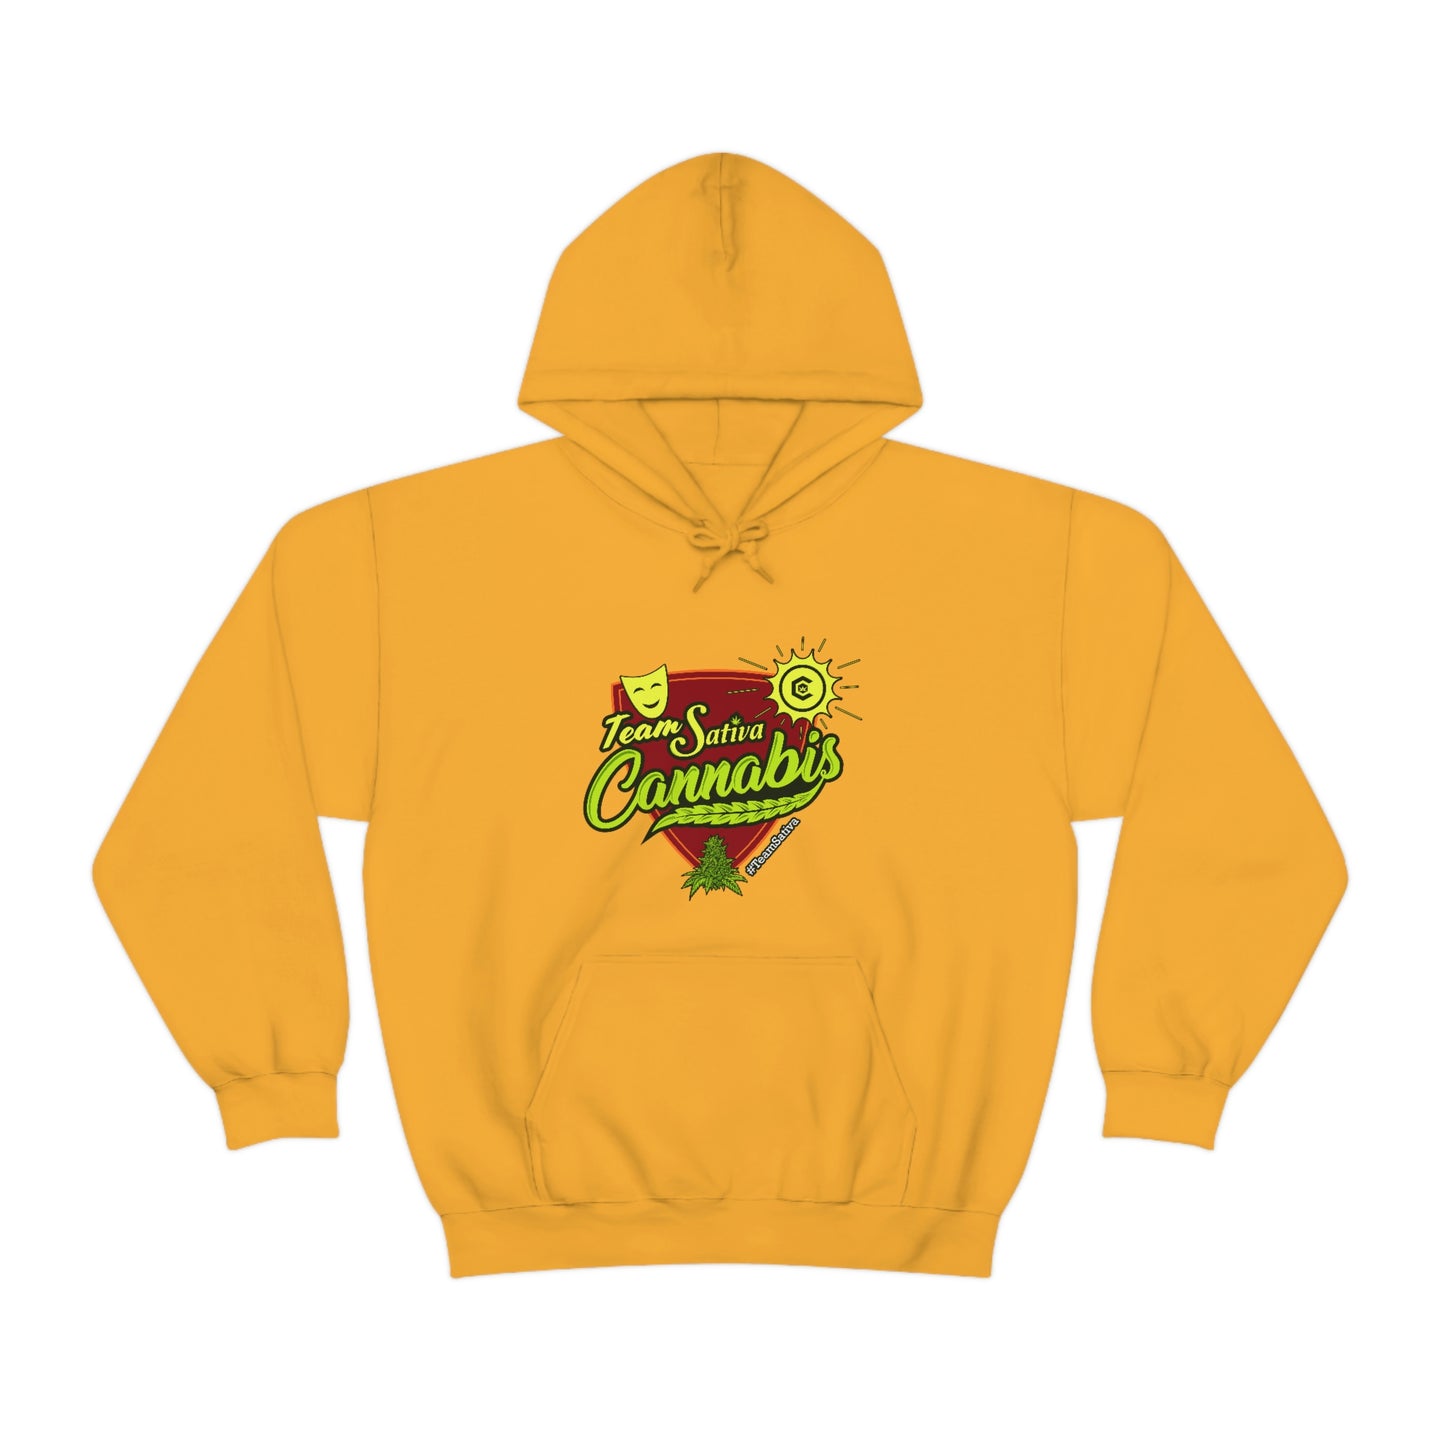 A yellow hooded sweatshirt with the word Team Sativa Stoner Sweatshirt on it.